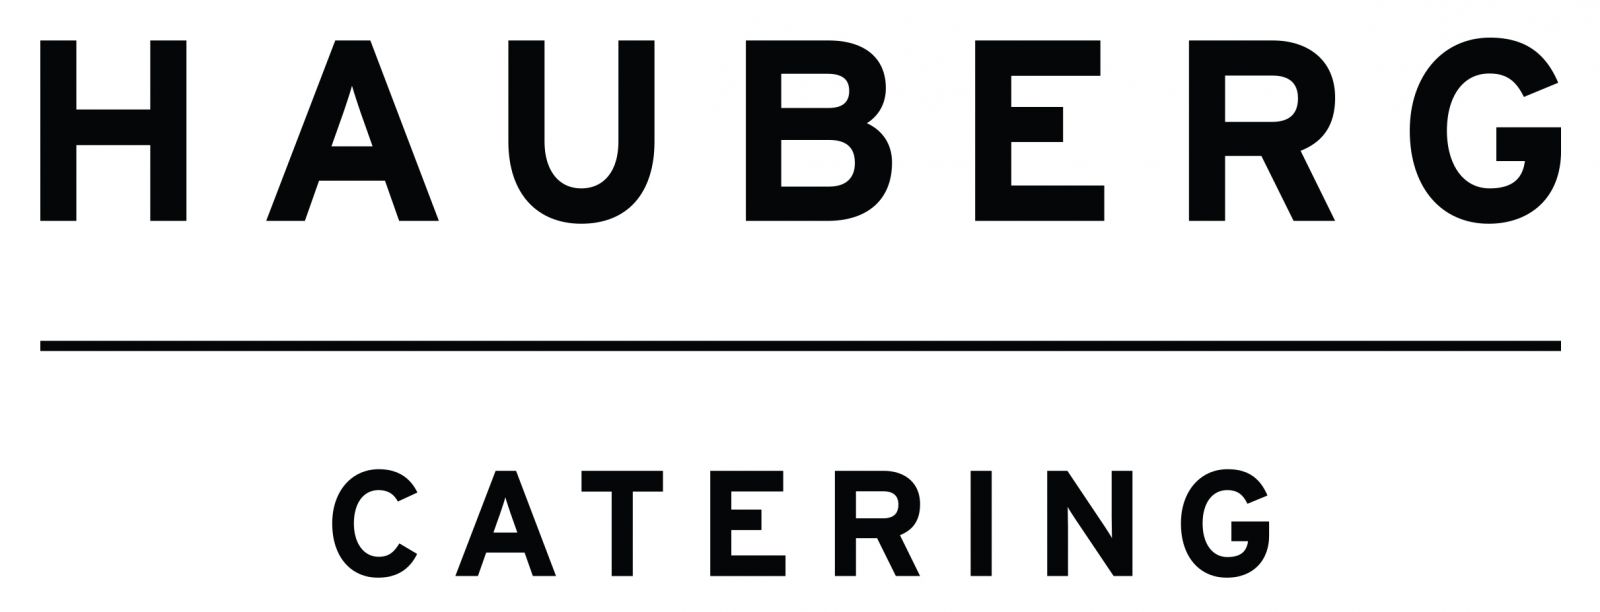 Hauberg catering logo